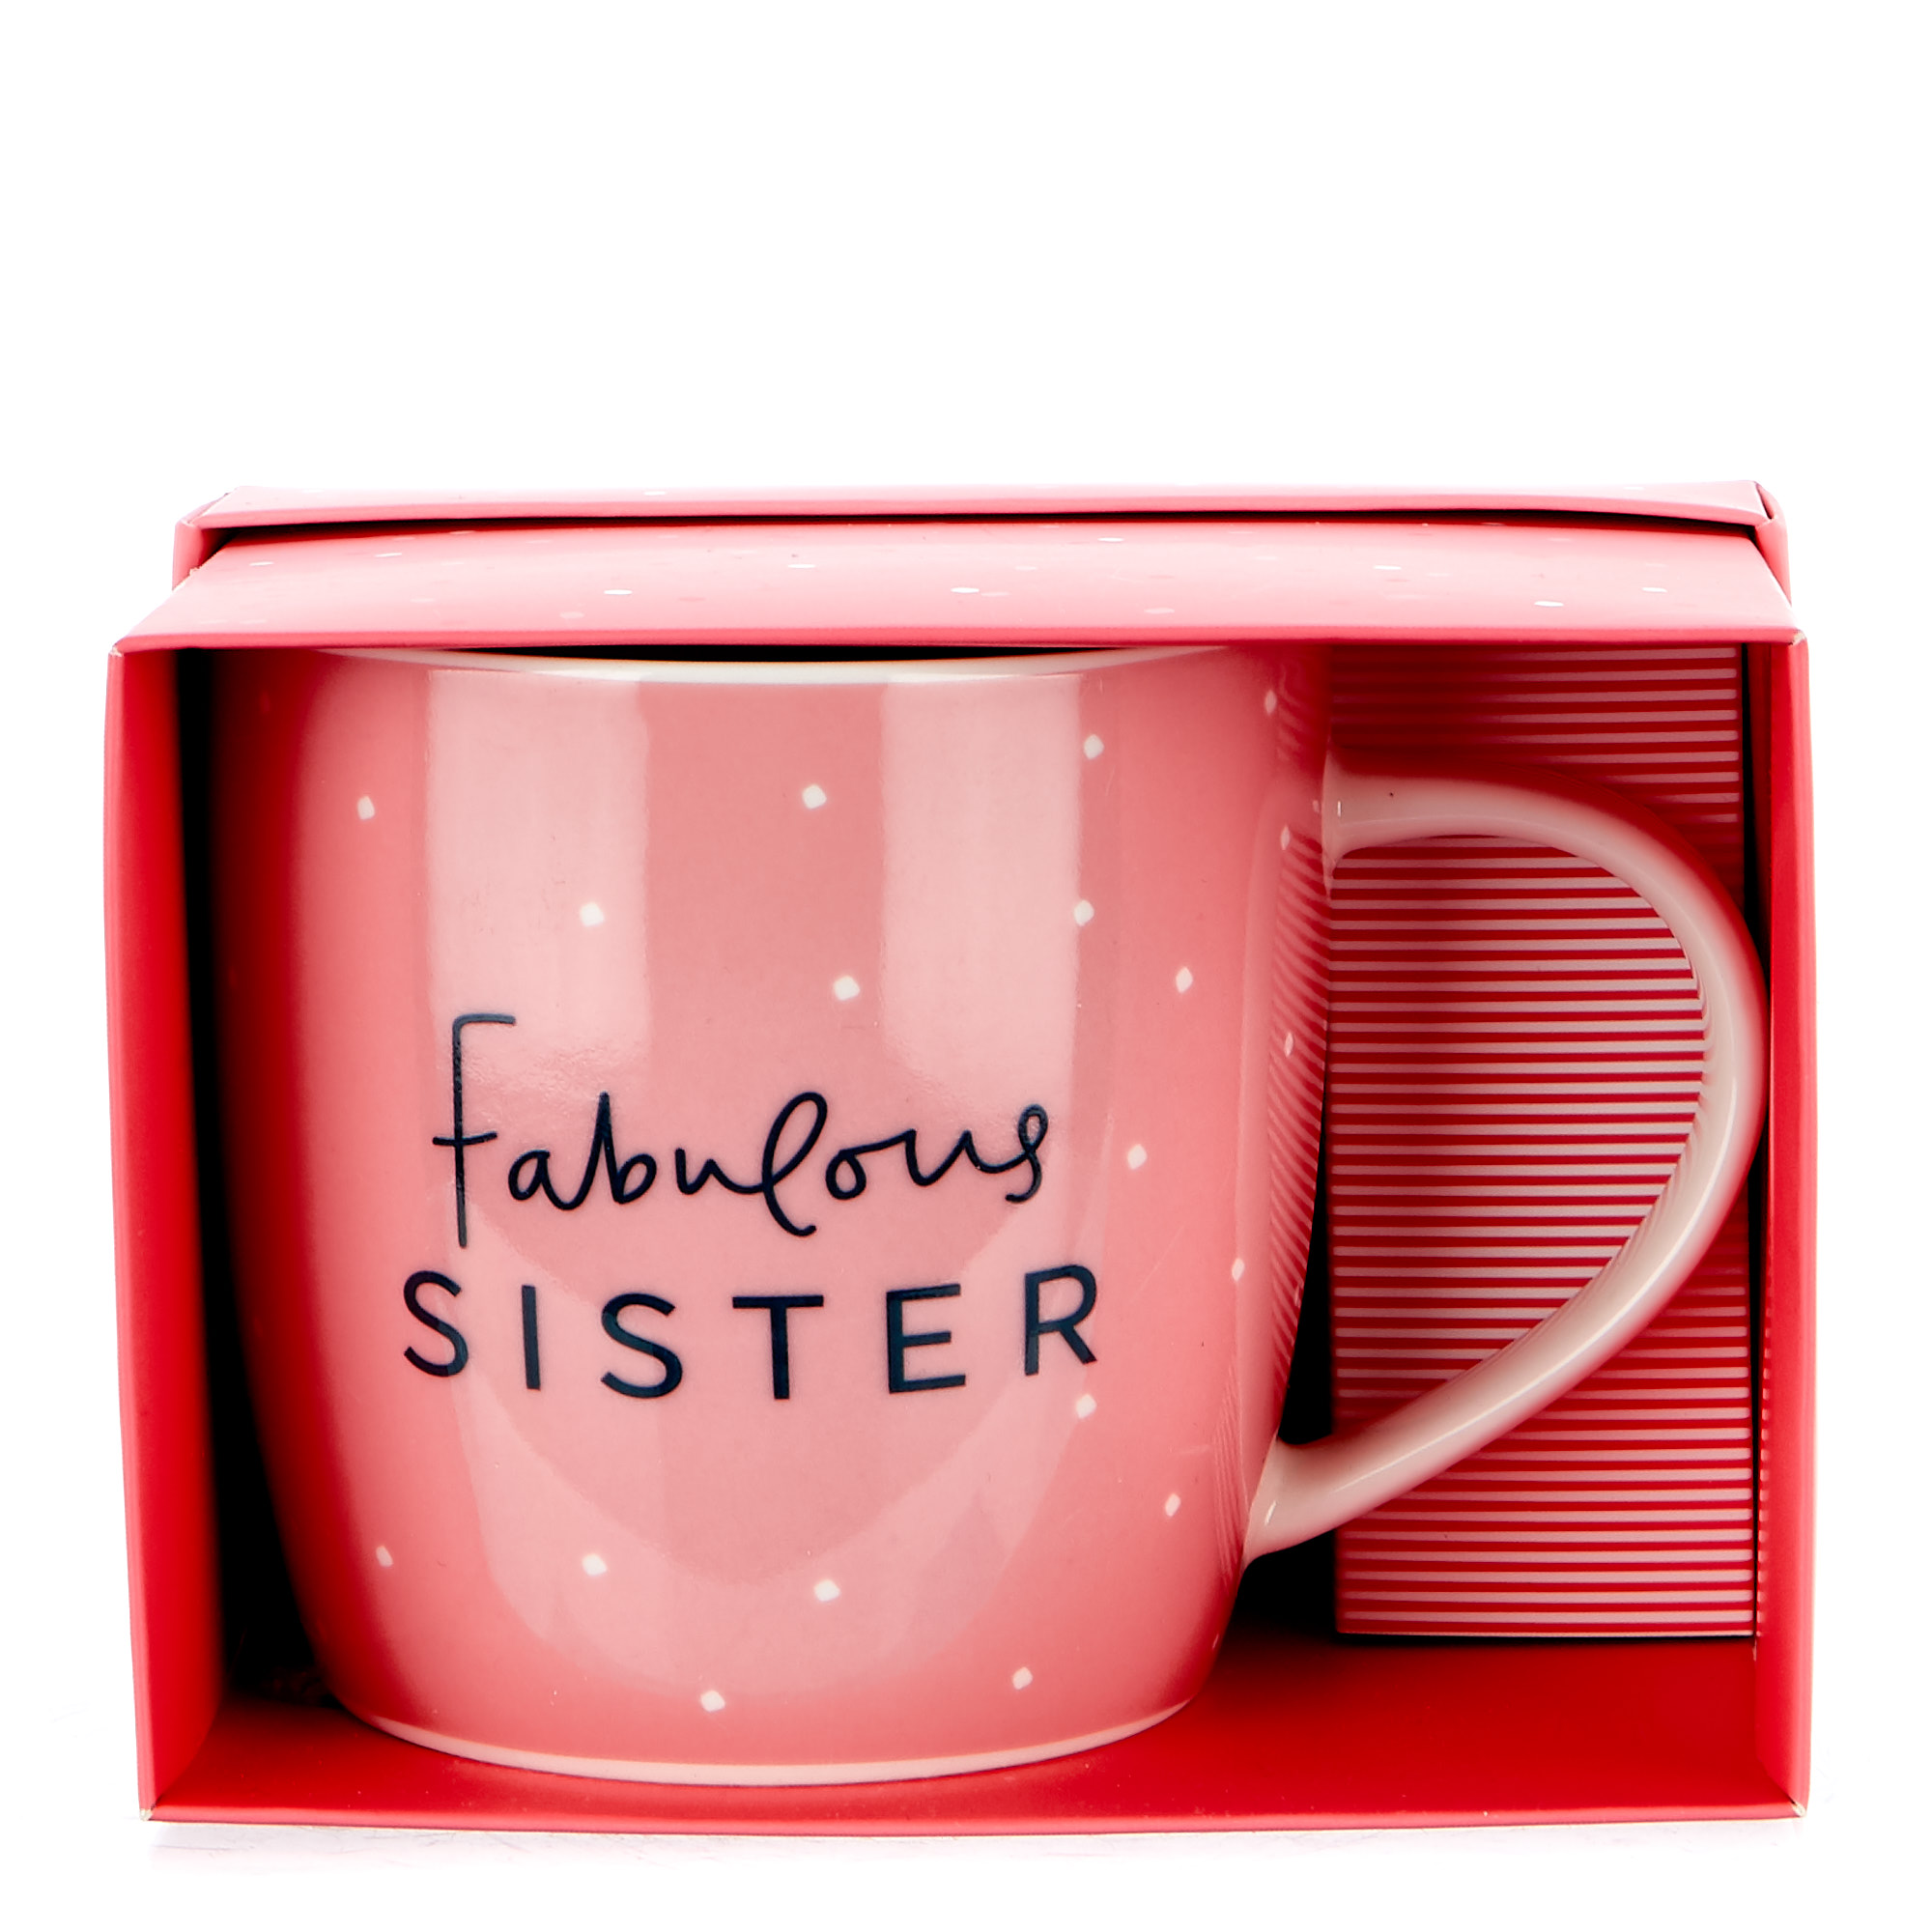 Fabulous Sister Mug